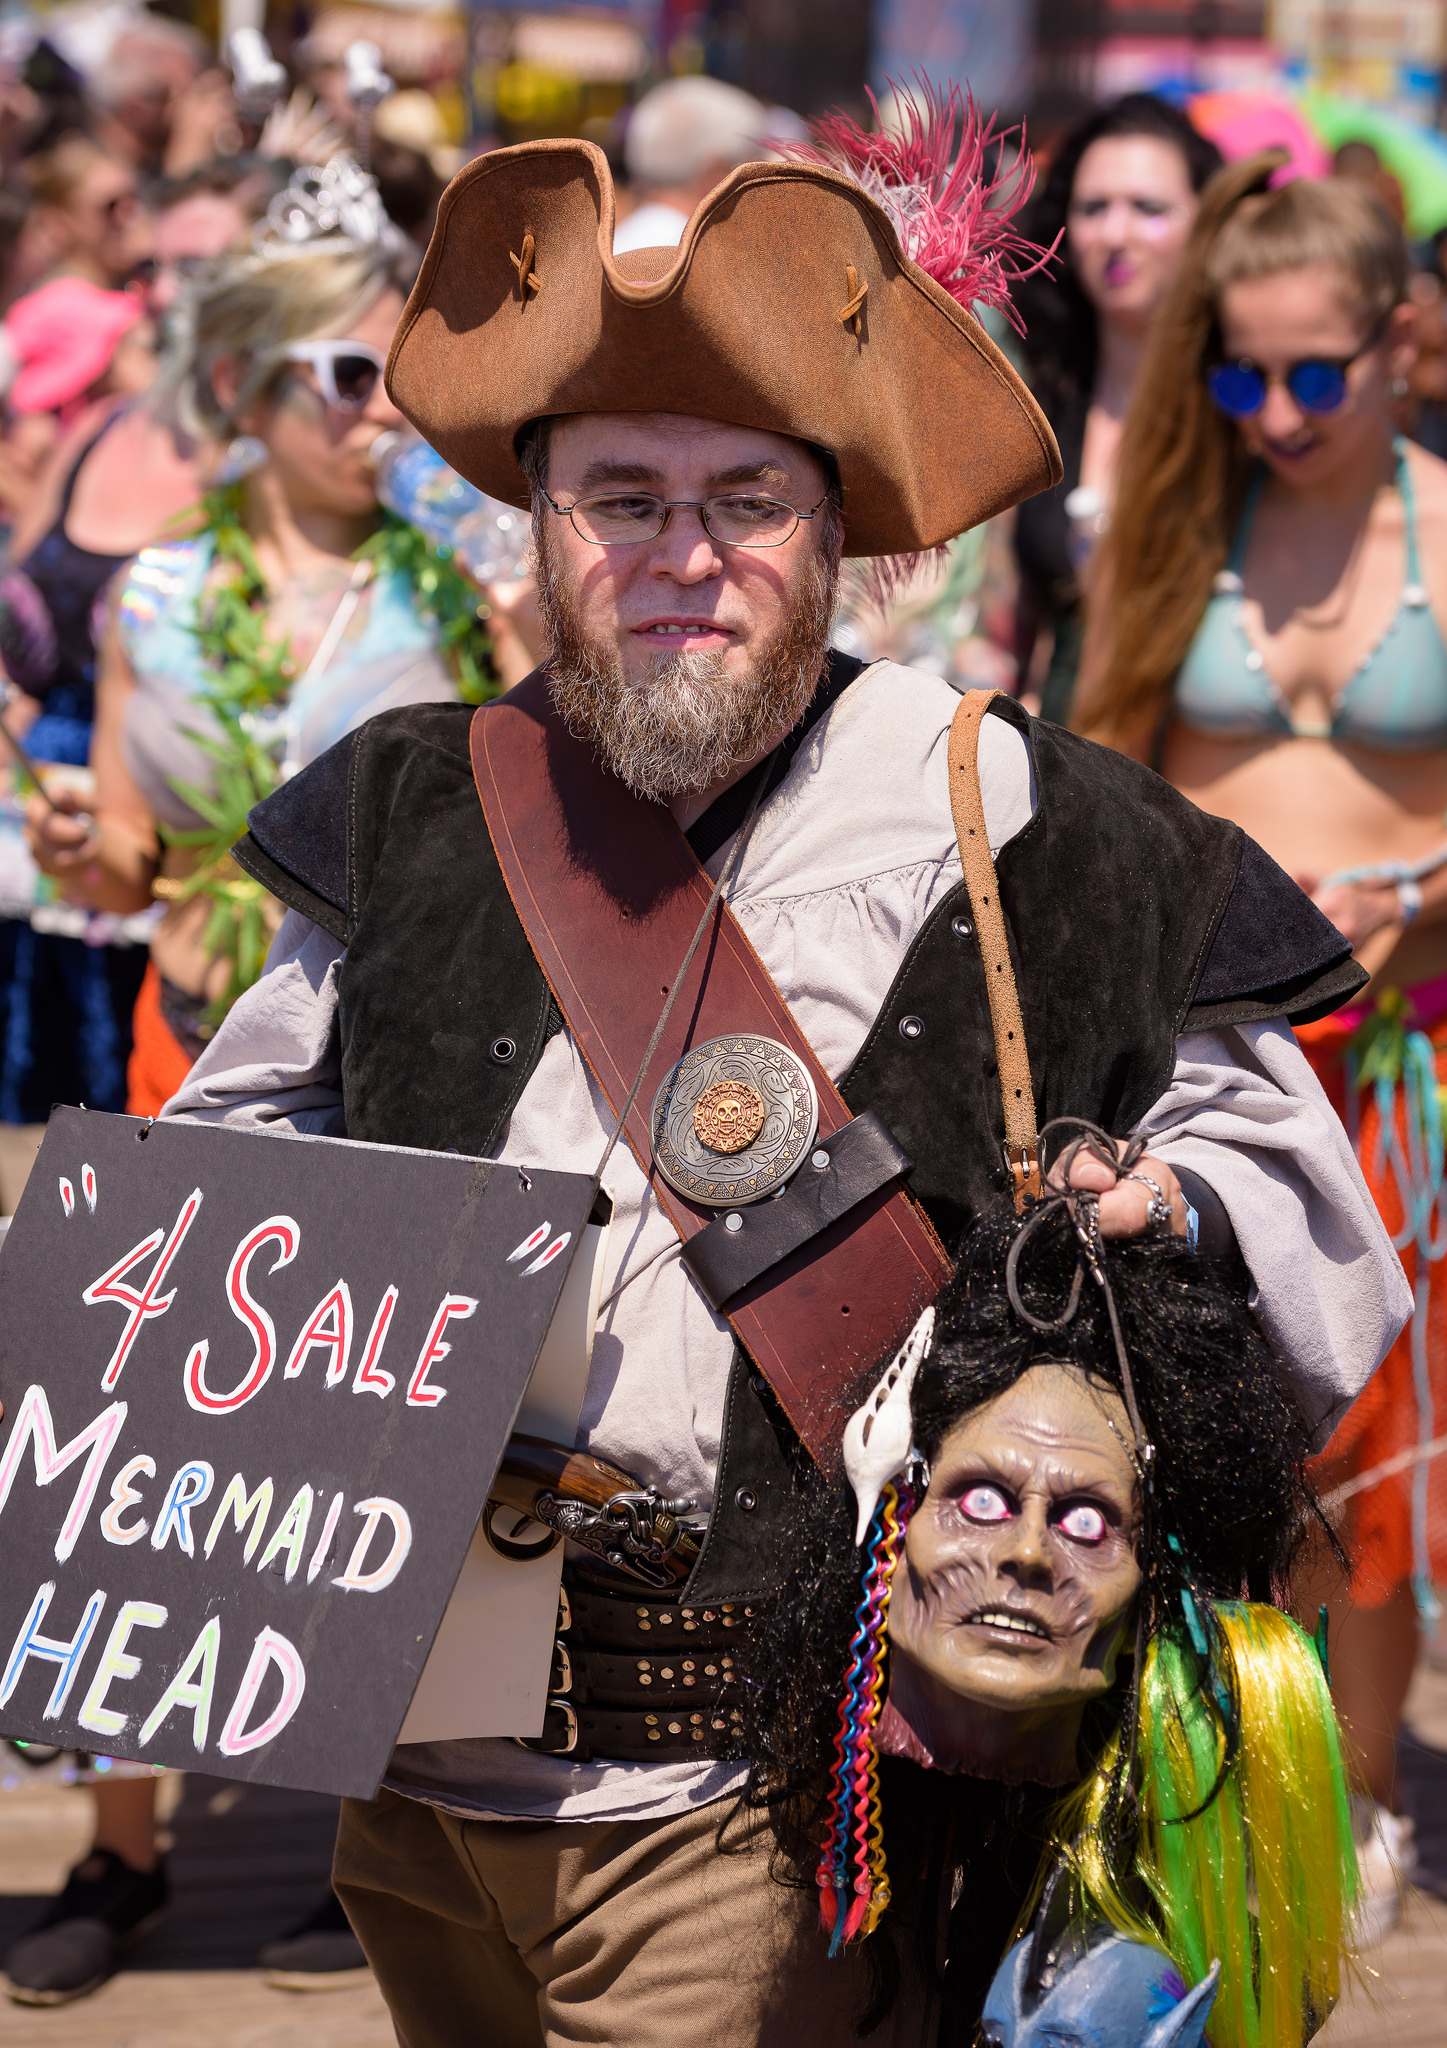 mermaid parade2 2016 Coney Island Mermaid Parade in NYC